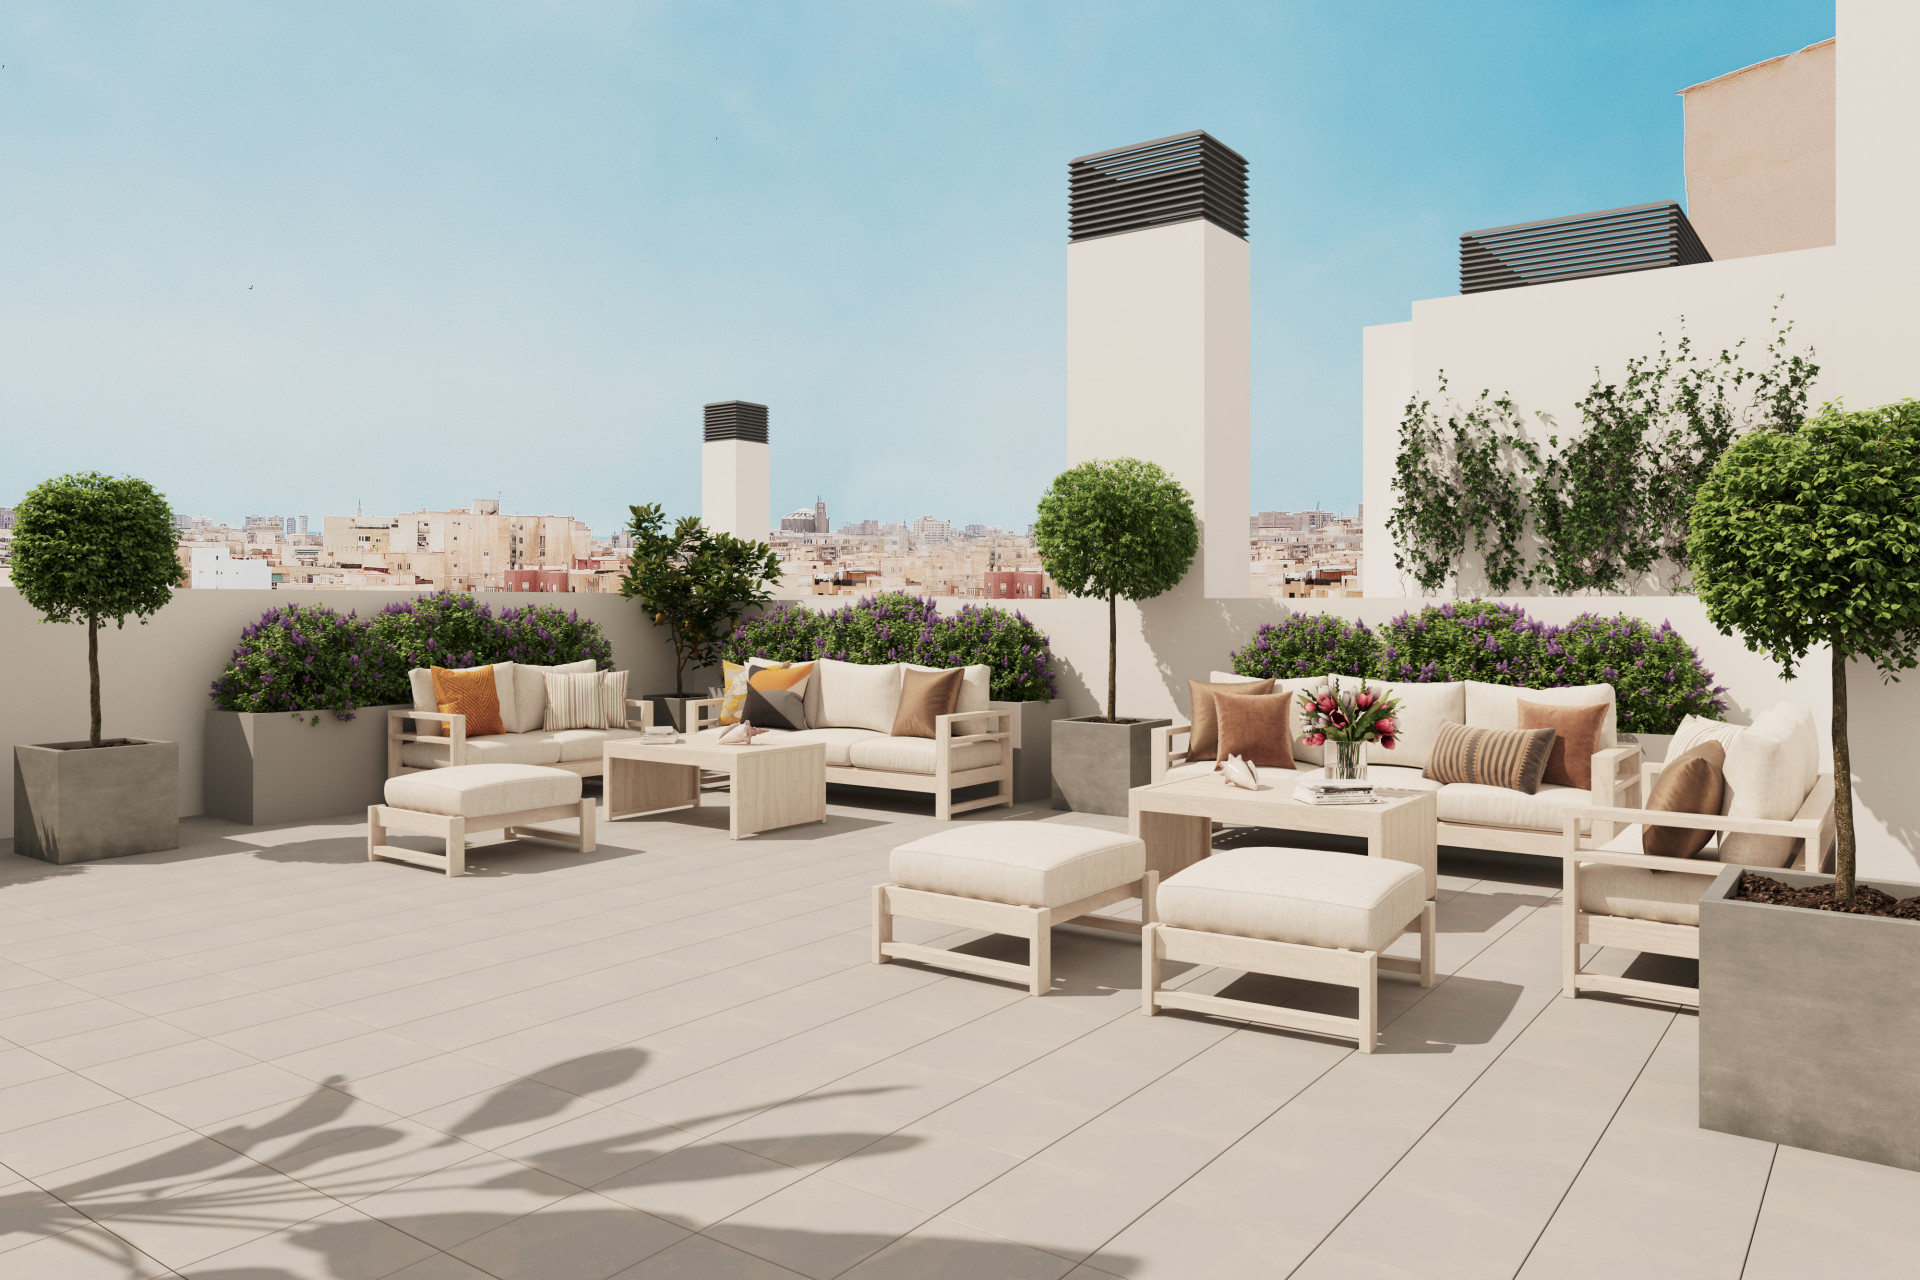 Off-plan modern apartments for sale in Málaga city centre